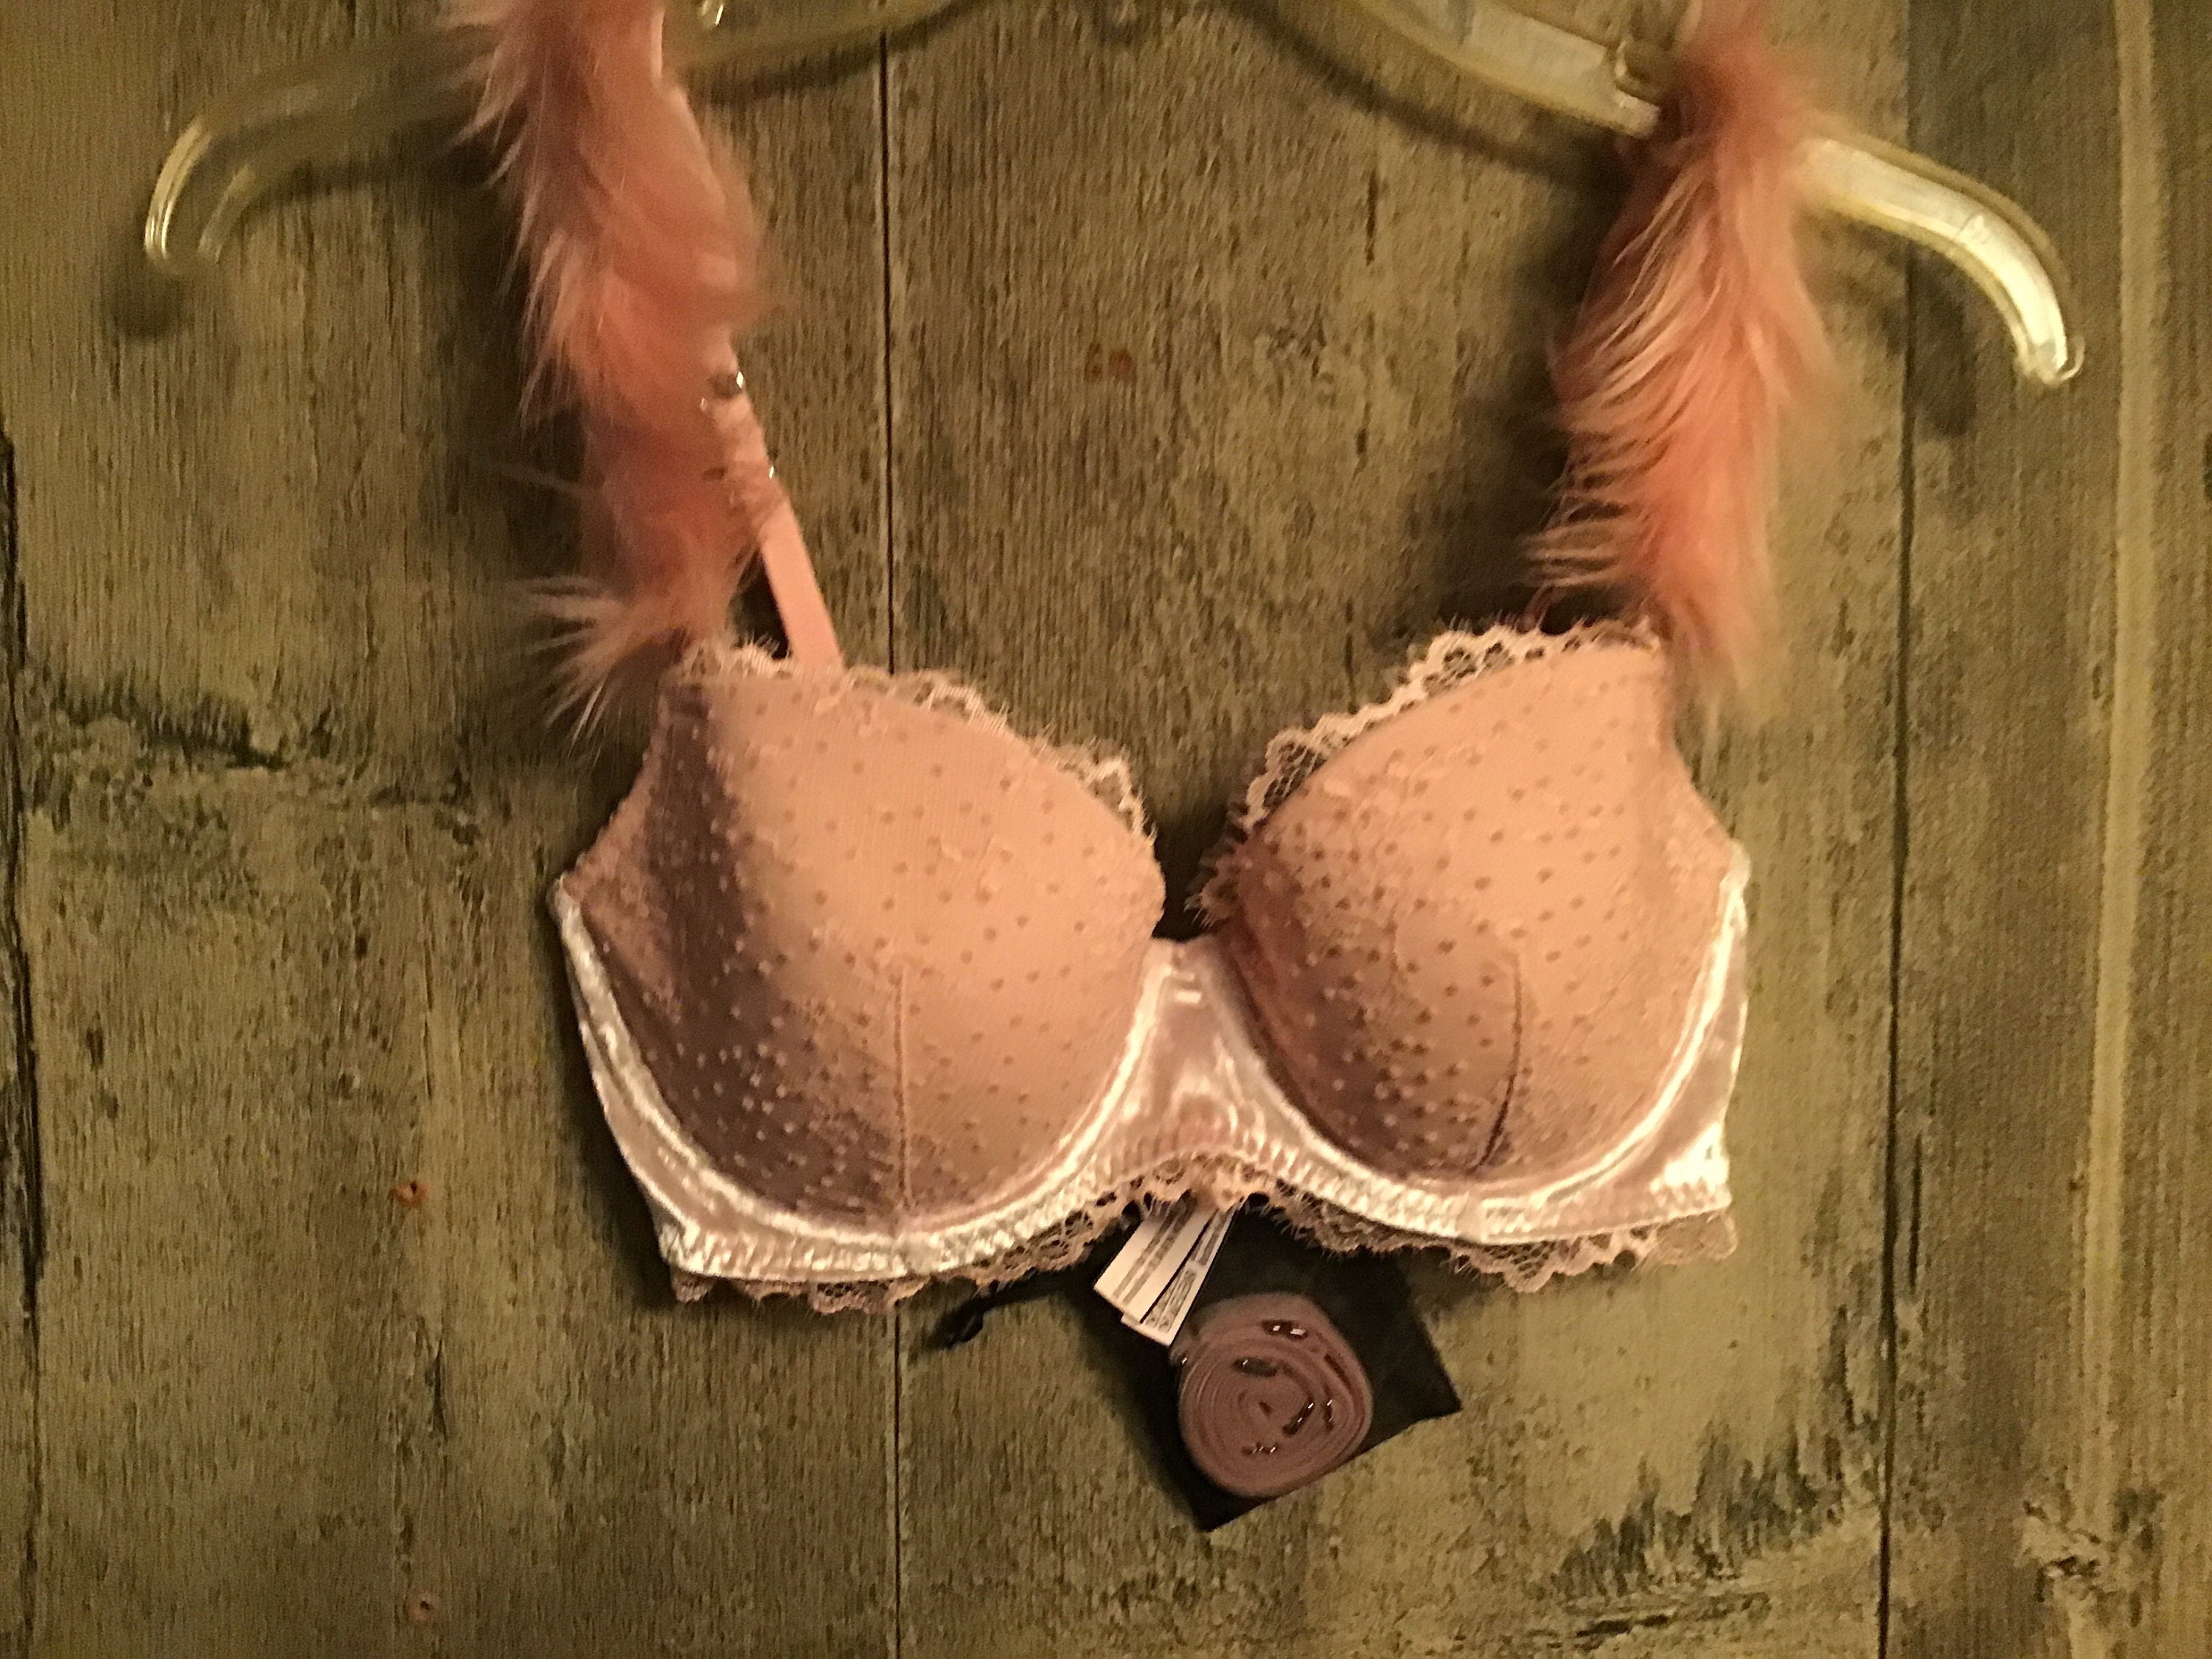 Victoria's Secret Bra 32D 32 D Lined Demi Pink SeXy V… - Gem